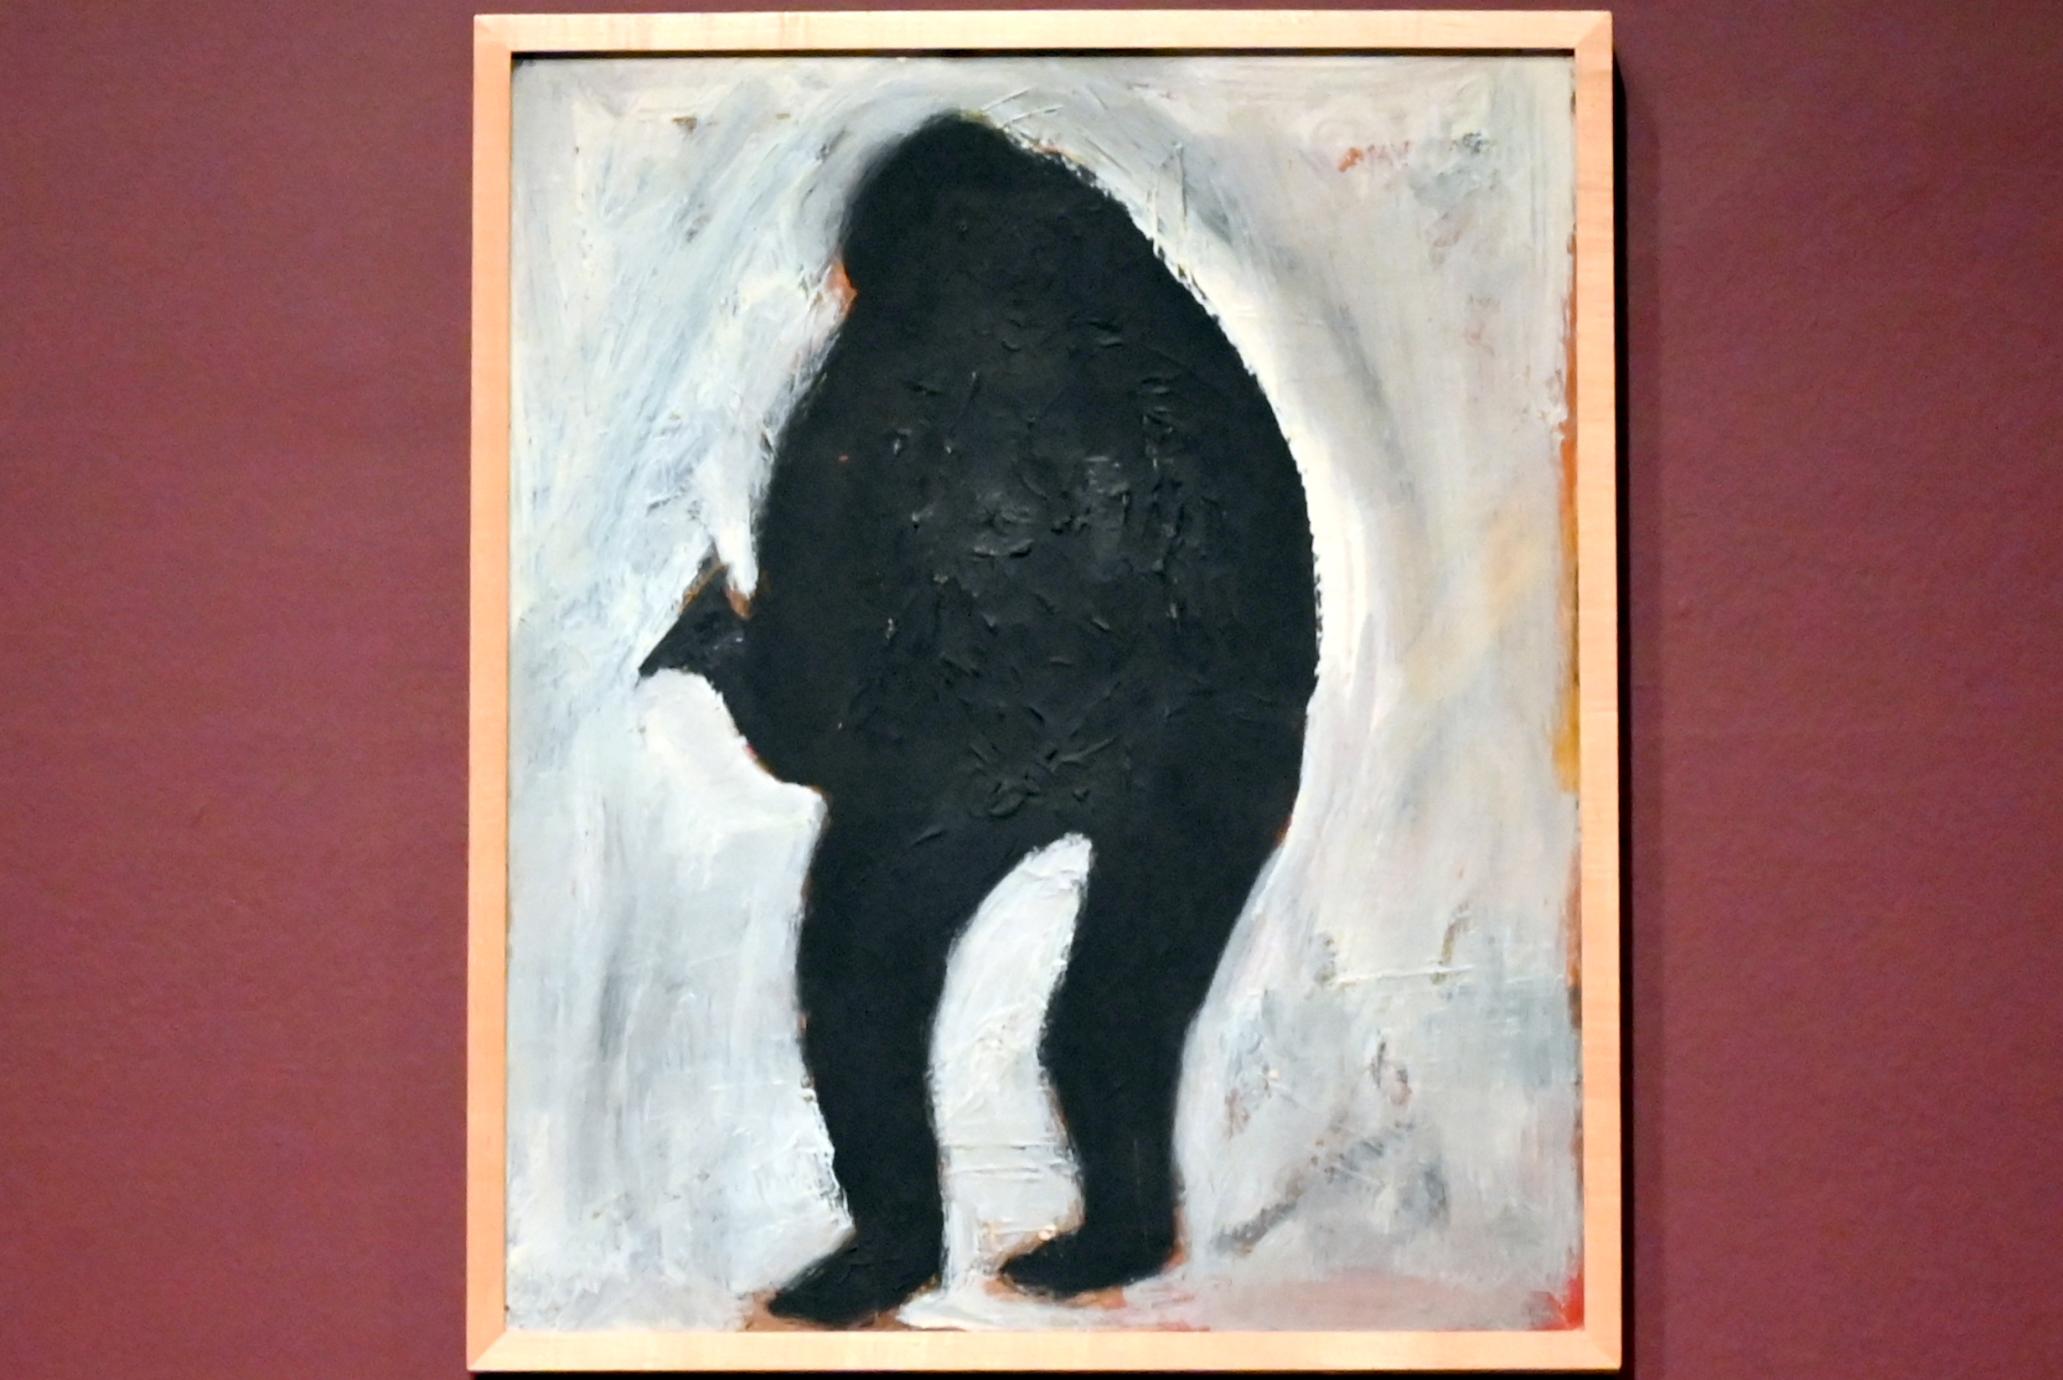 Ted Joans (1958–1990), Vogel lebt!, London, Tate Modern, Ausstellung "Surrealism Beyond Borders" vom 24.02.-29.08.2022, Saal 6, 1958